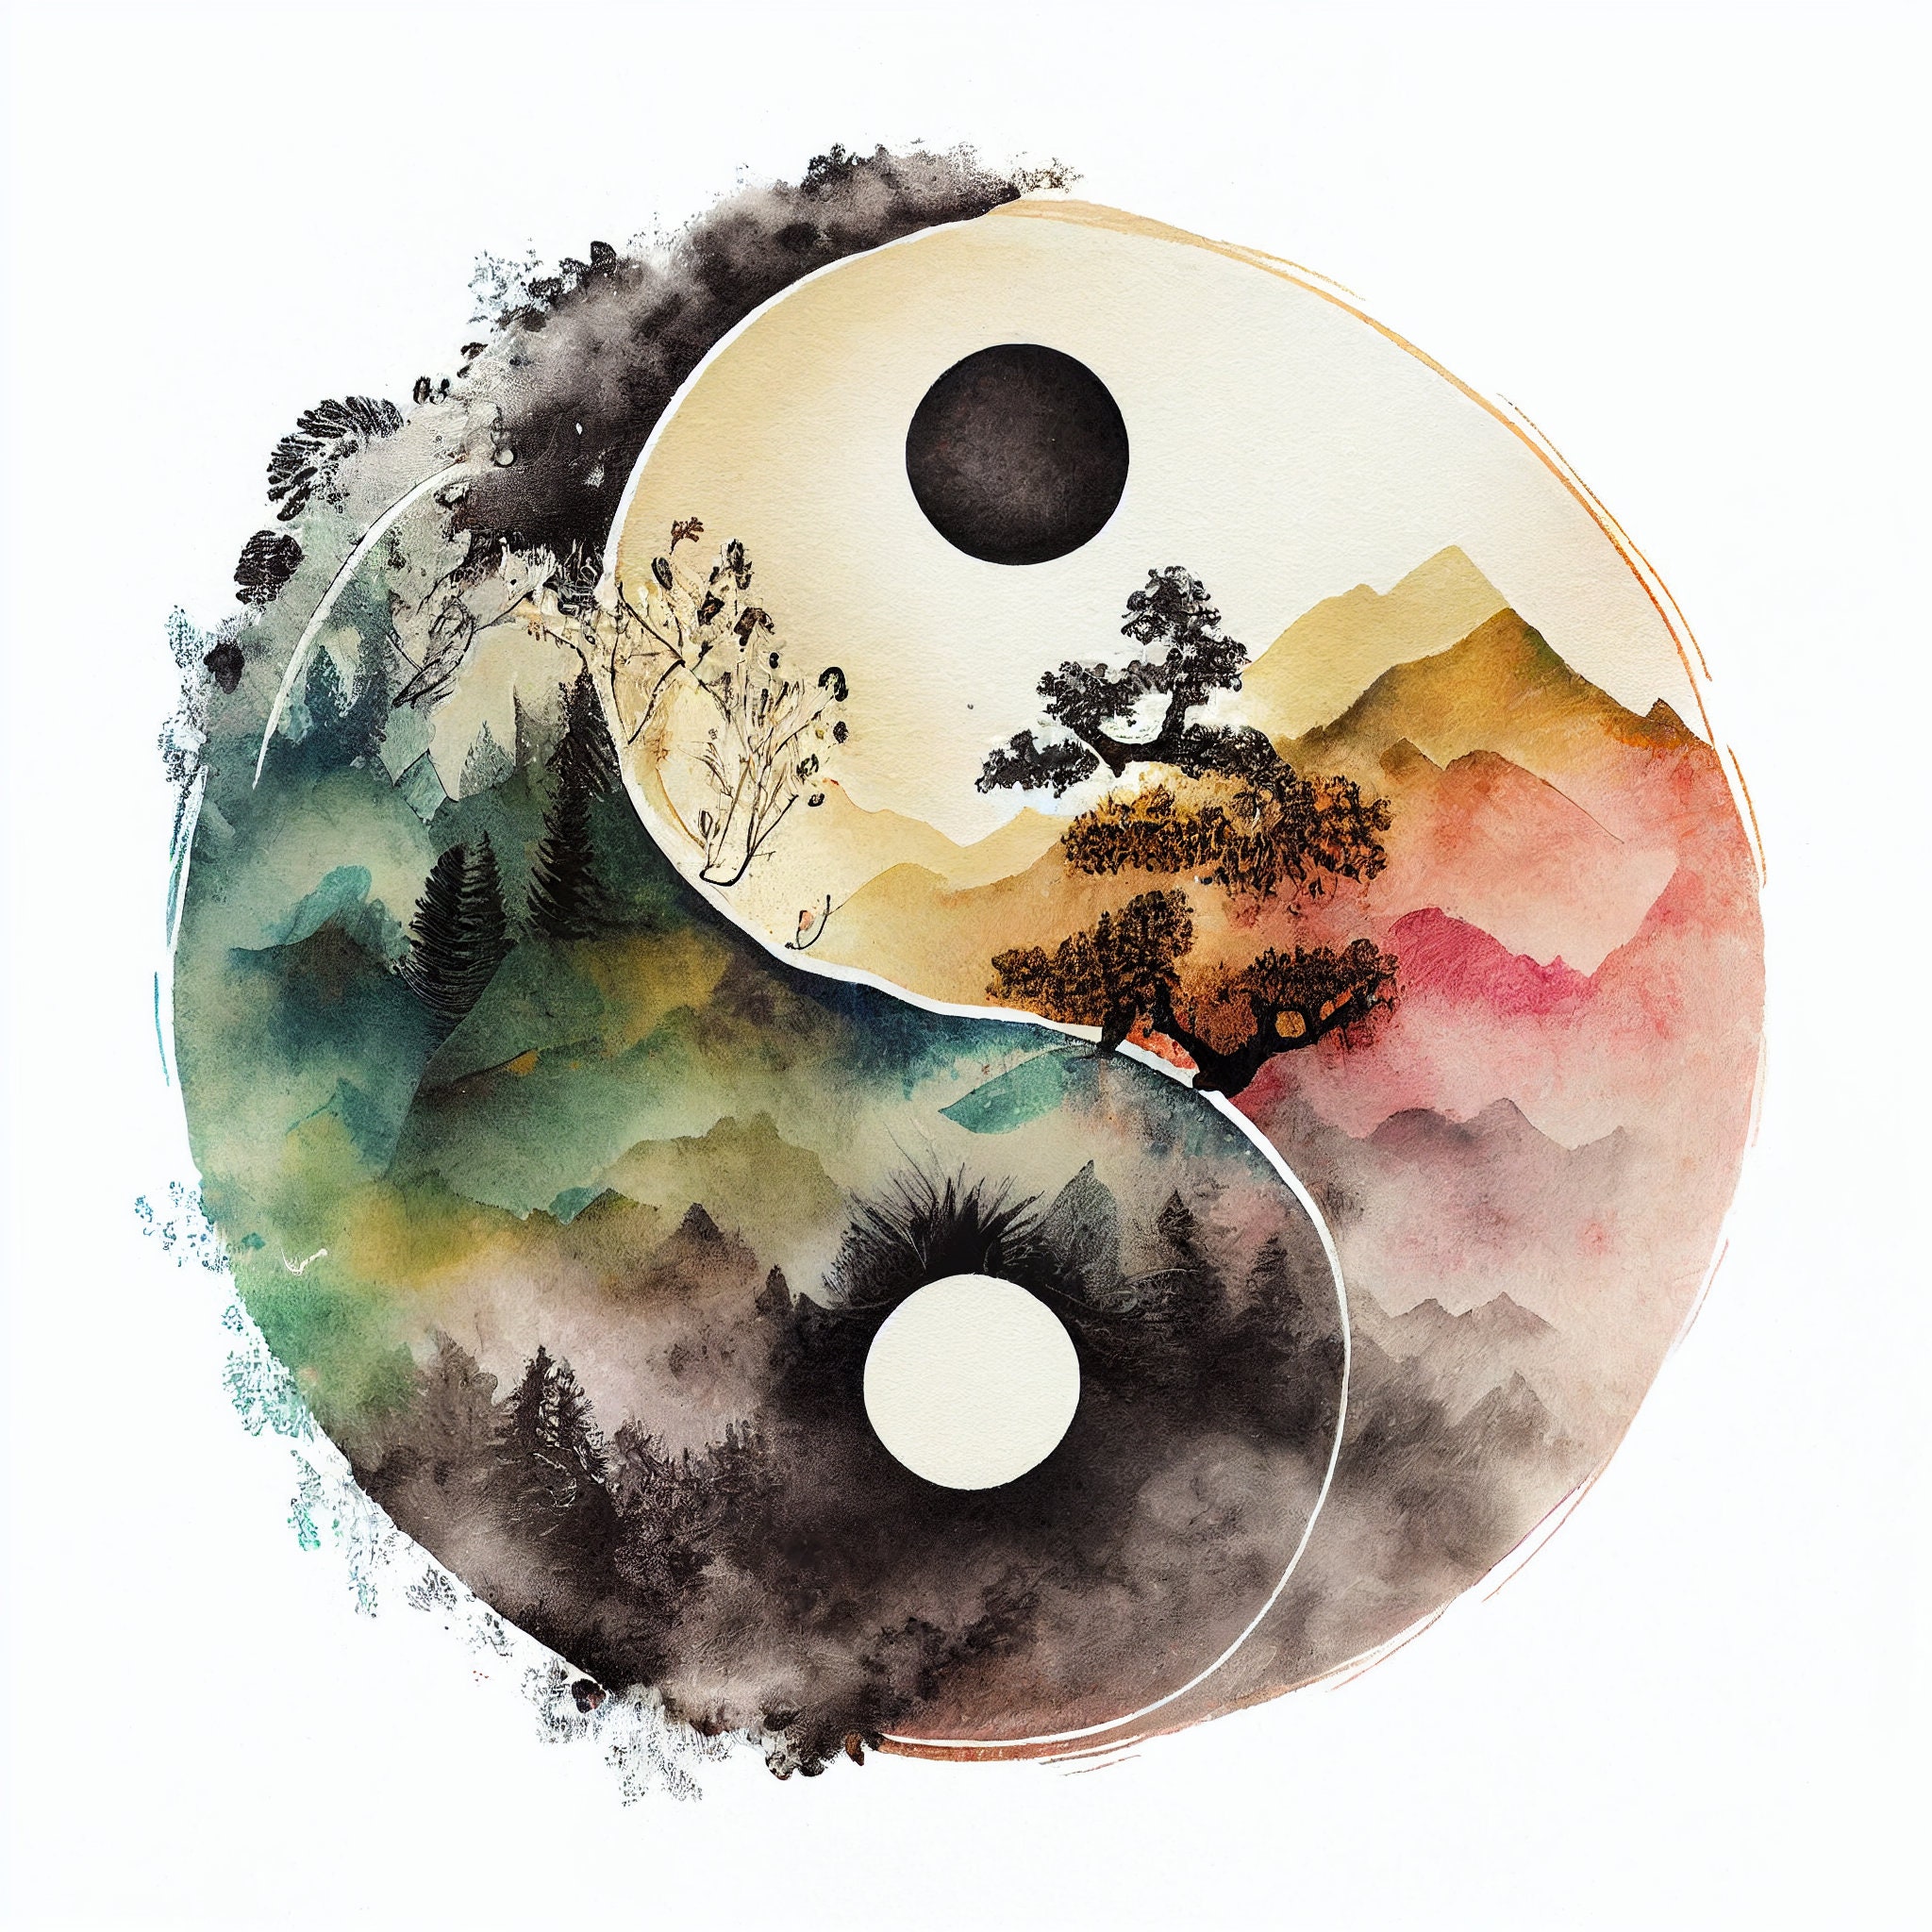 Black and White Yin Yang Wall Art, Spiritual Print, Taoism Art, Yoga Wall  Decor, Printable Wall Art, Digital Download 